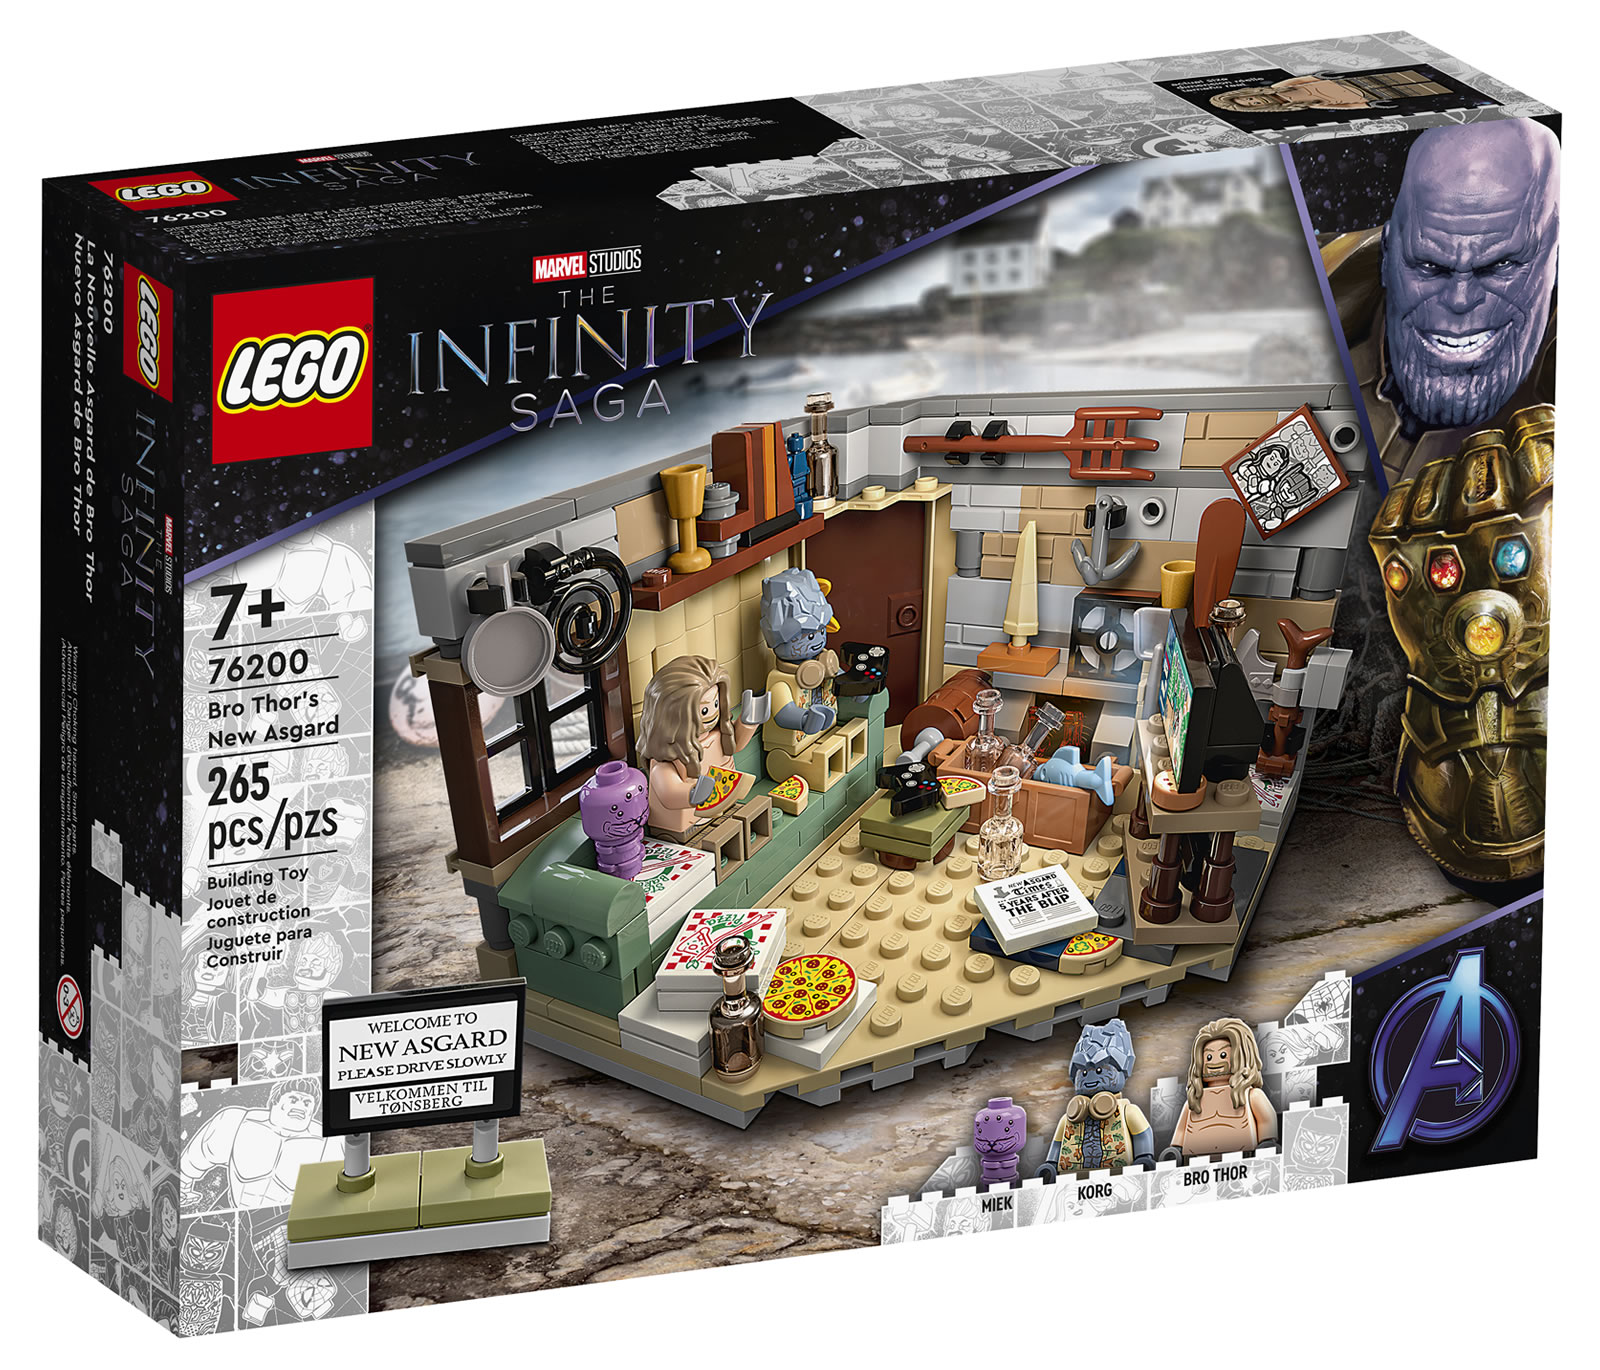 LEGO Marvel Infinity Saga Bro Thor's New Asgard (76200) Revealed - The Brick Fan